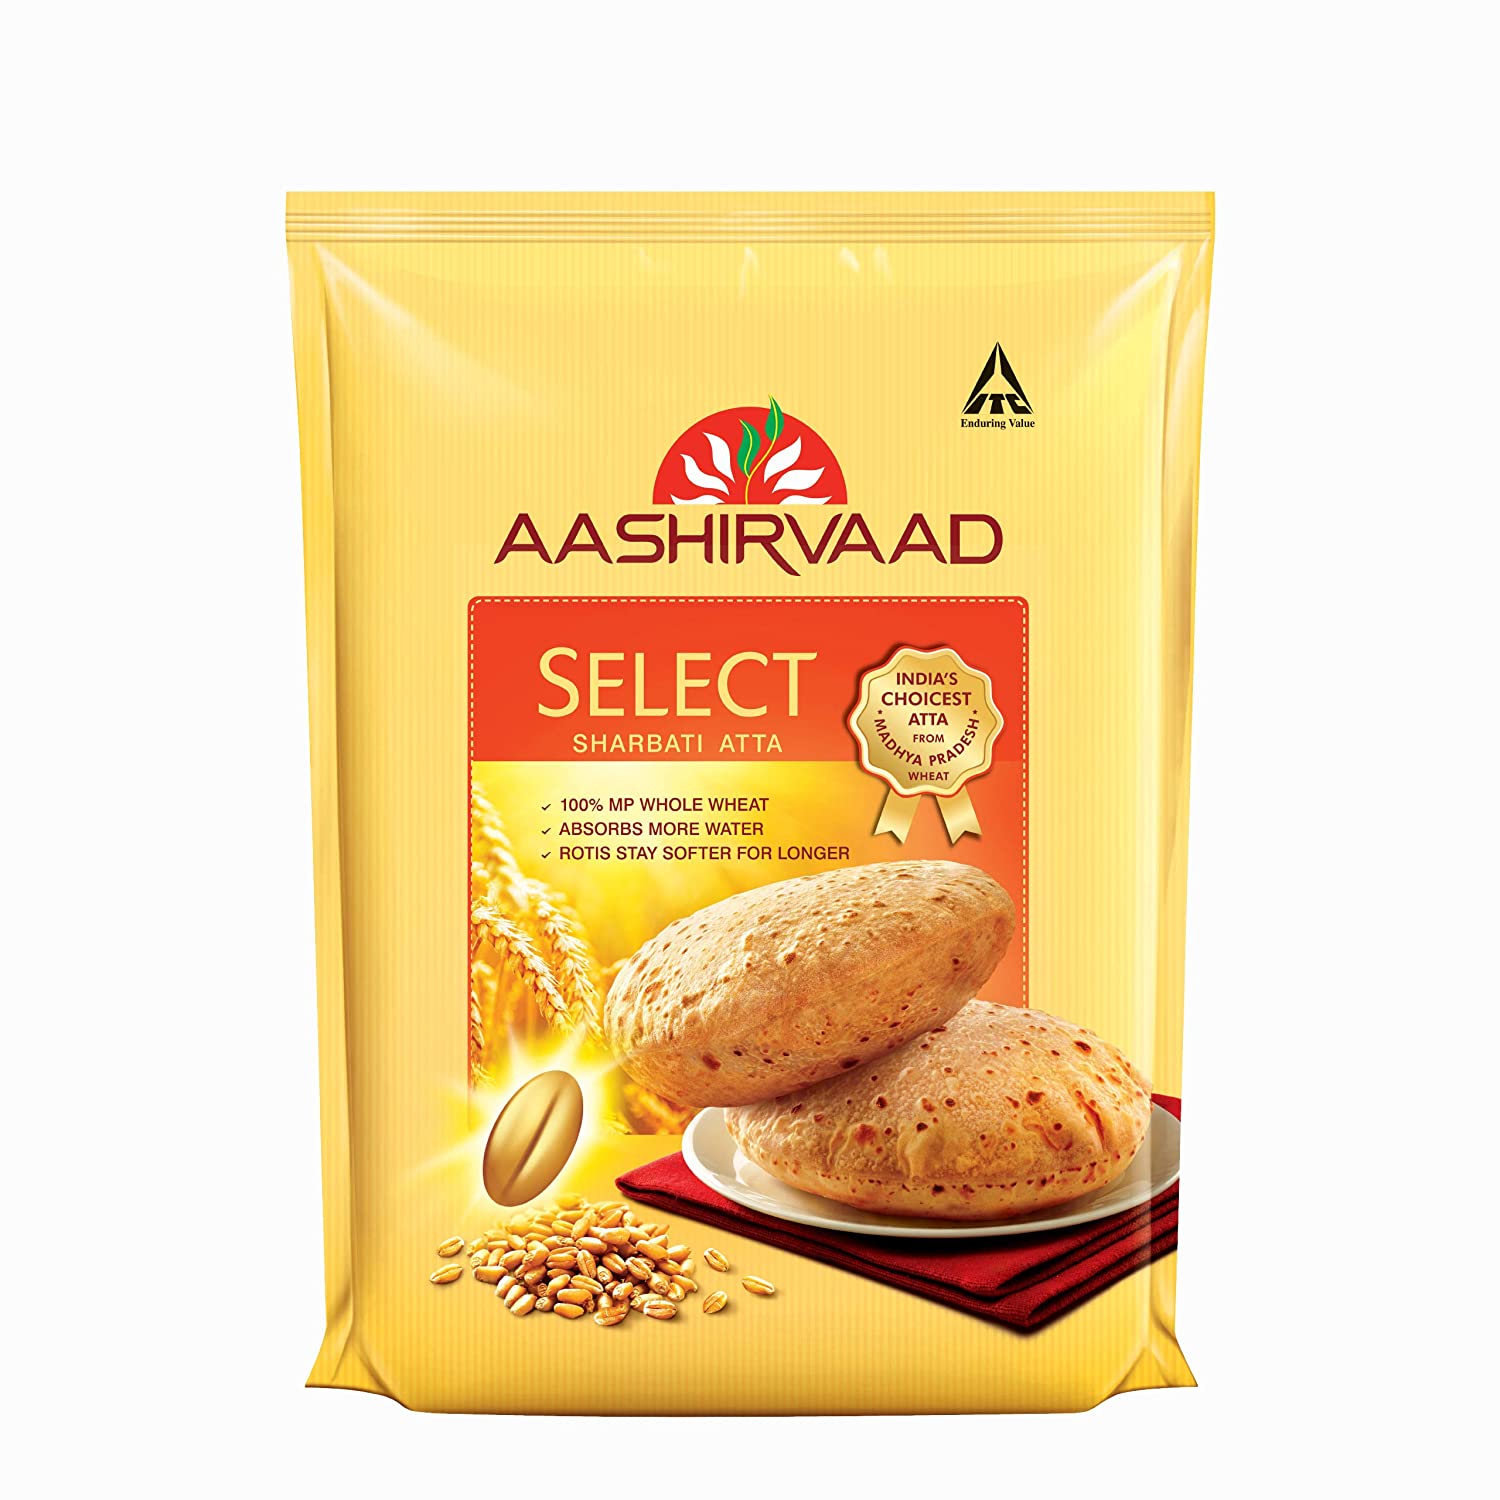 Aashirvaad Select Sharbatti Atta, 5kg